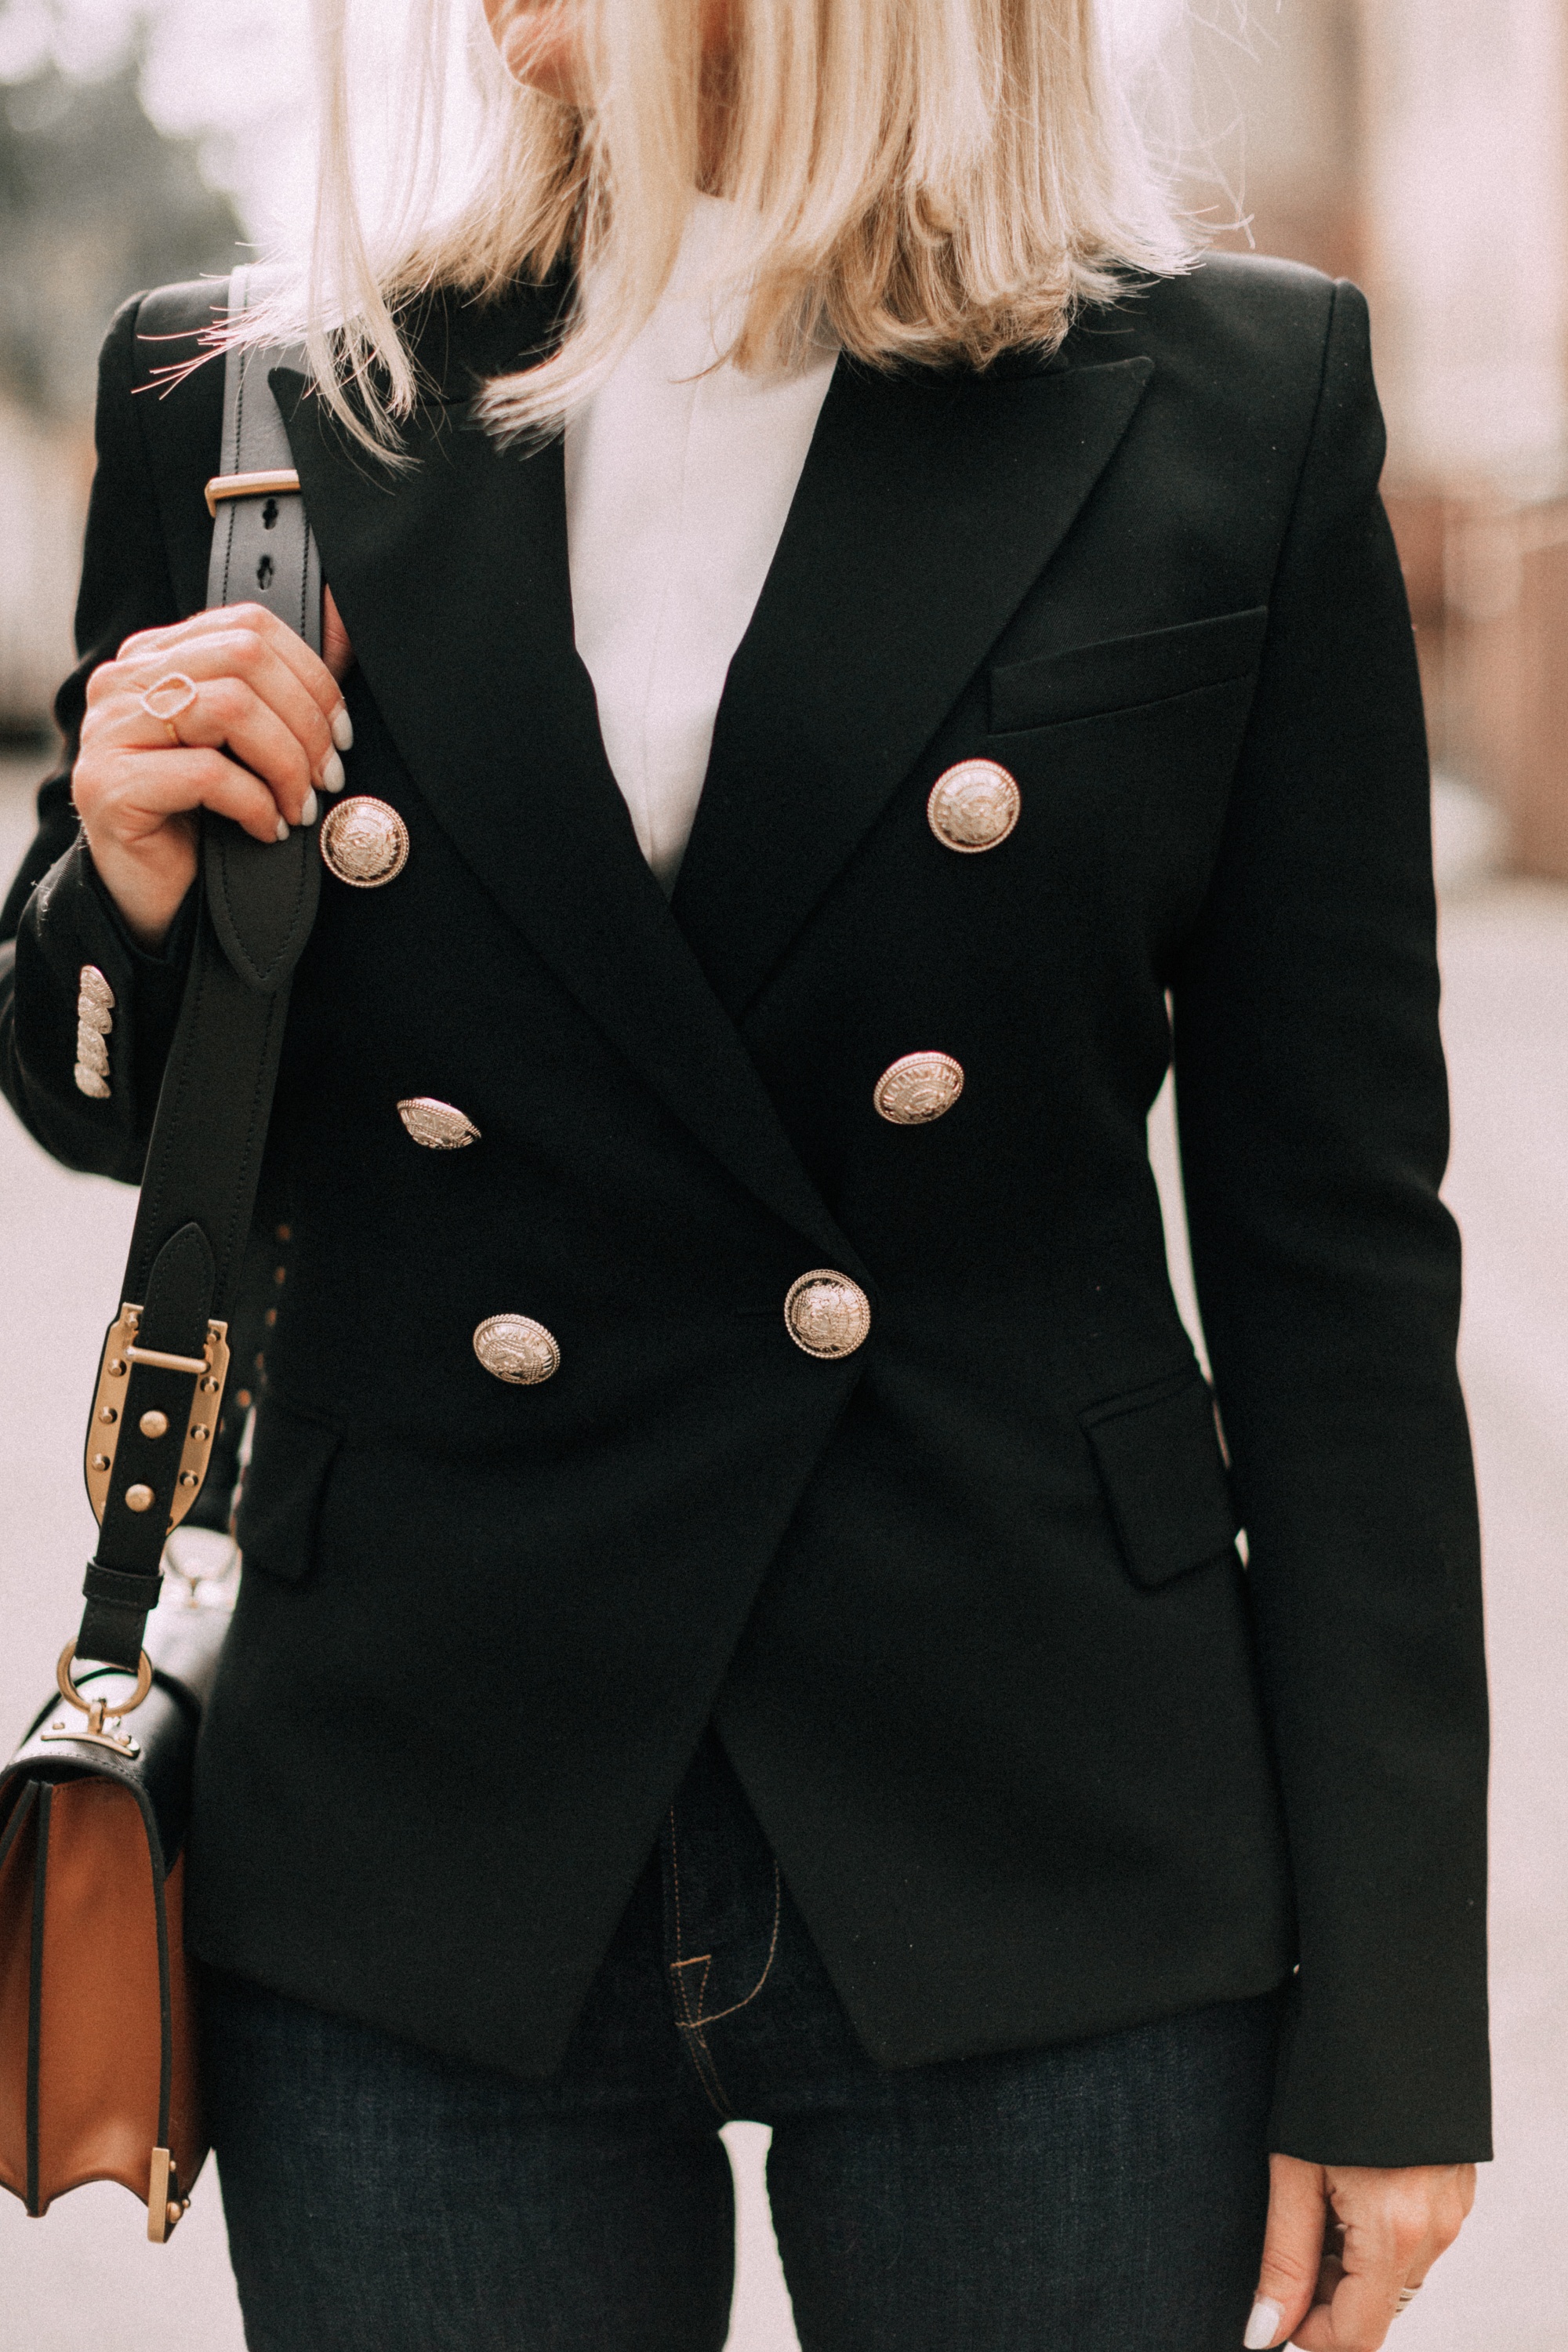 black Balmain blazer with gold buttons worn with Prada cahier crossbody handbag outfit